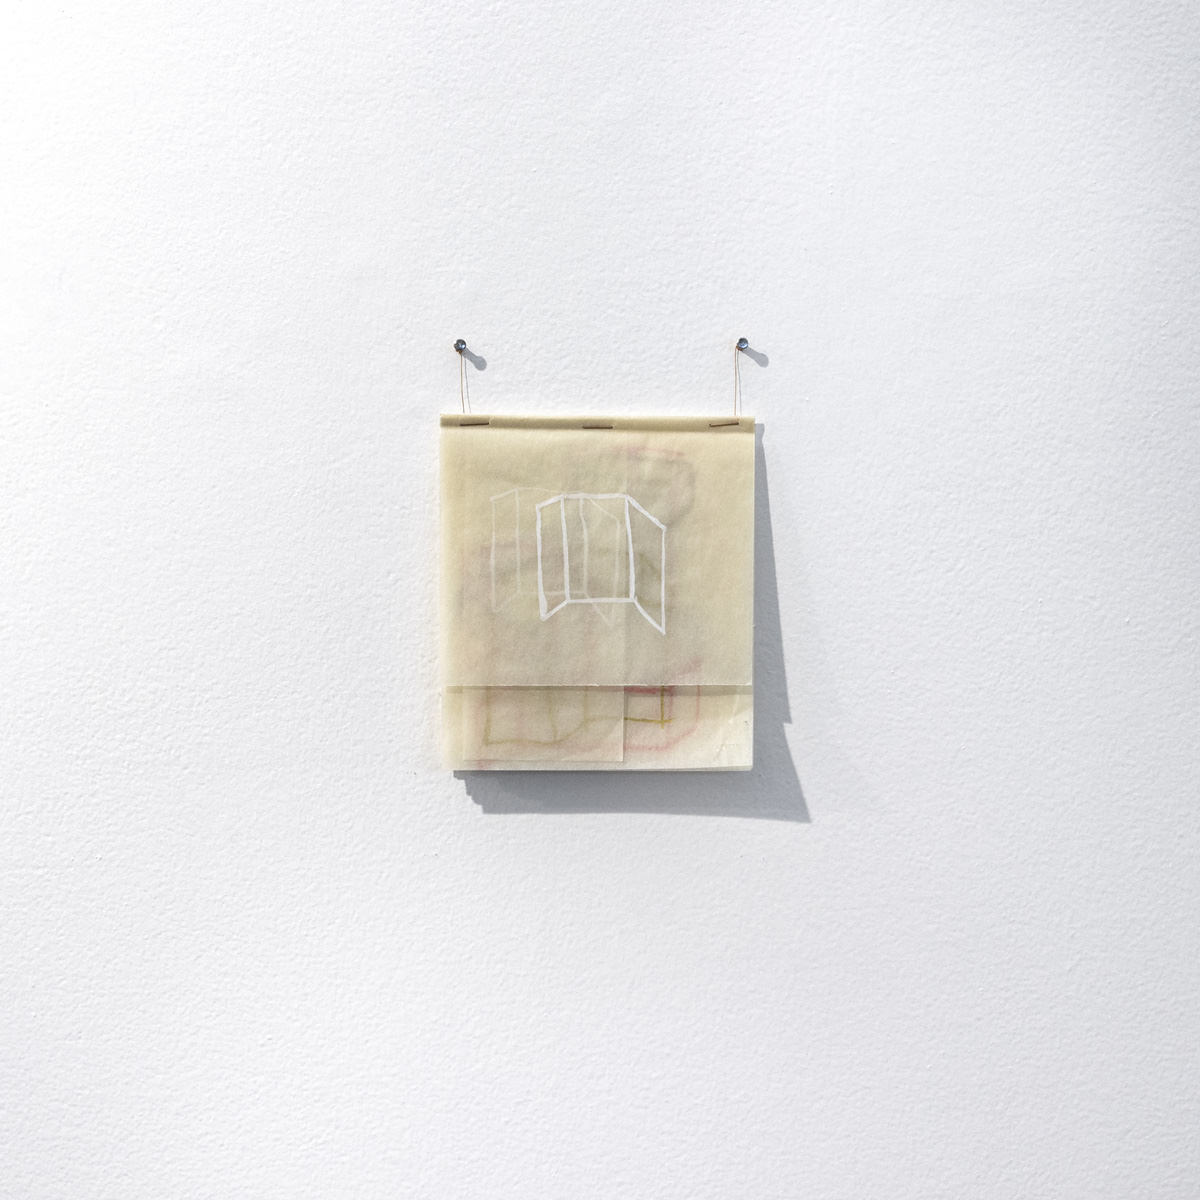 Flávia Ribeiro, Dibujo, 2019 - gouache y polvo de bronce en una hoja doble de papel de dibujo - 28,7 x 21 cm. Fotos: Divulgación.